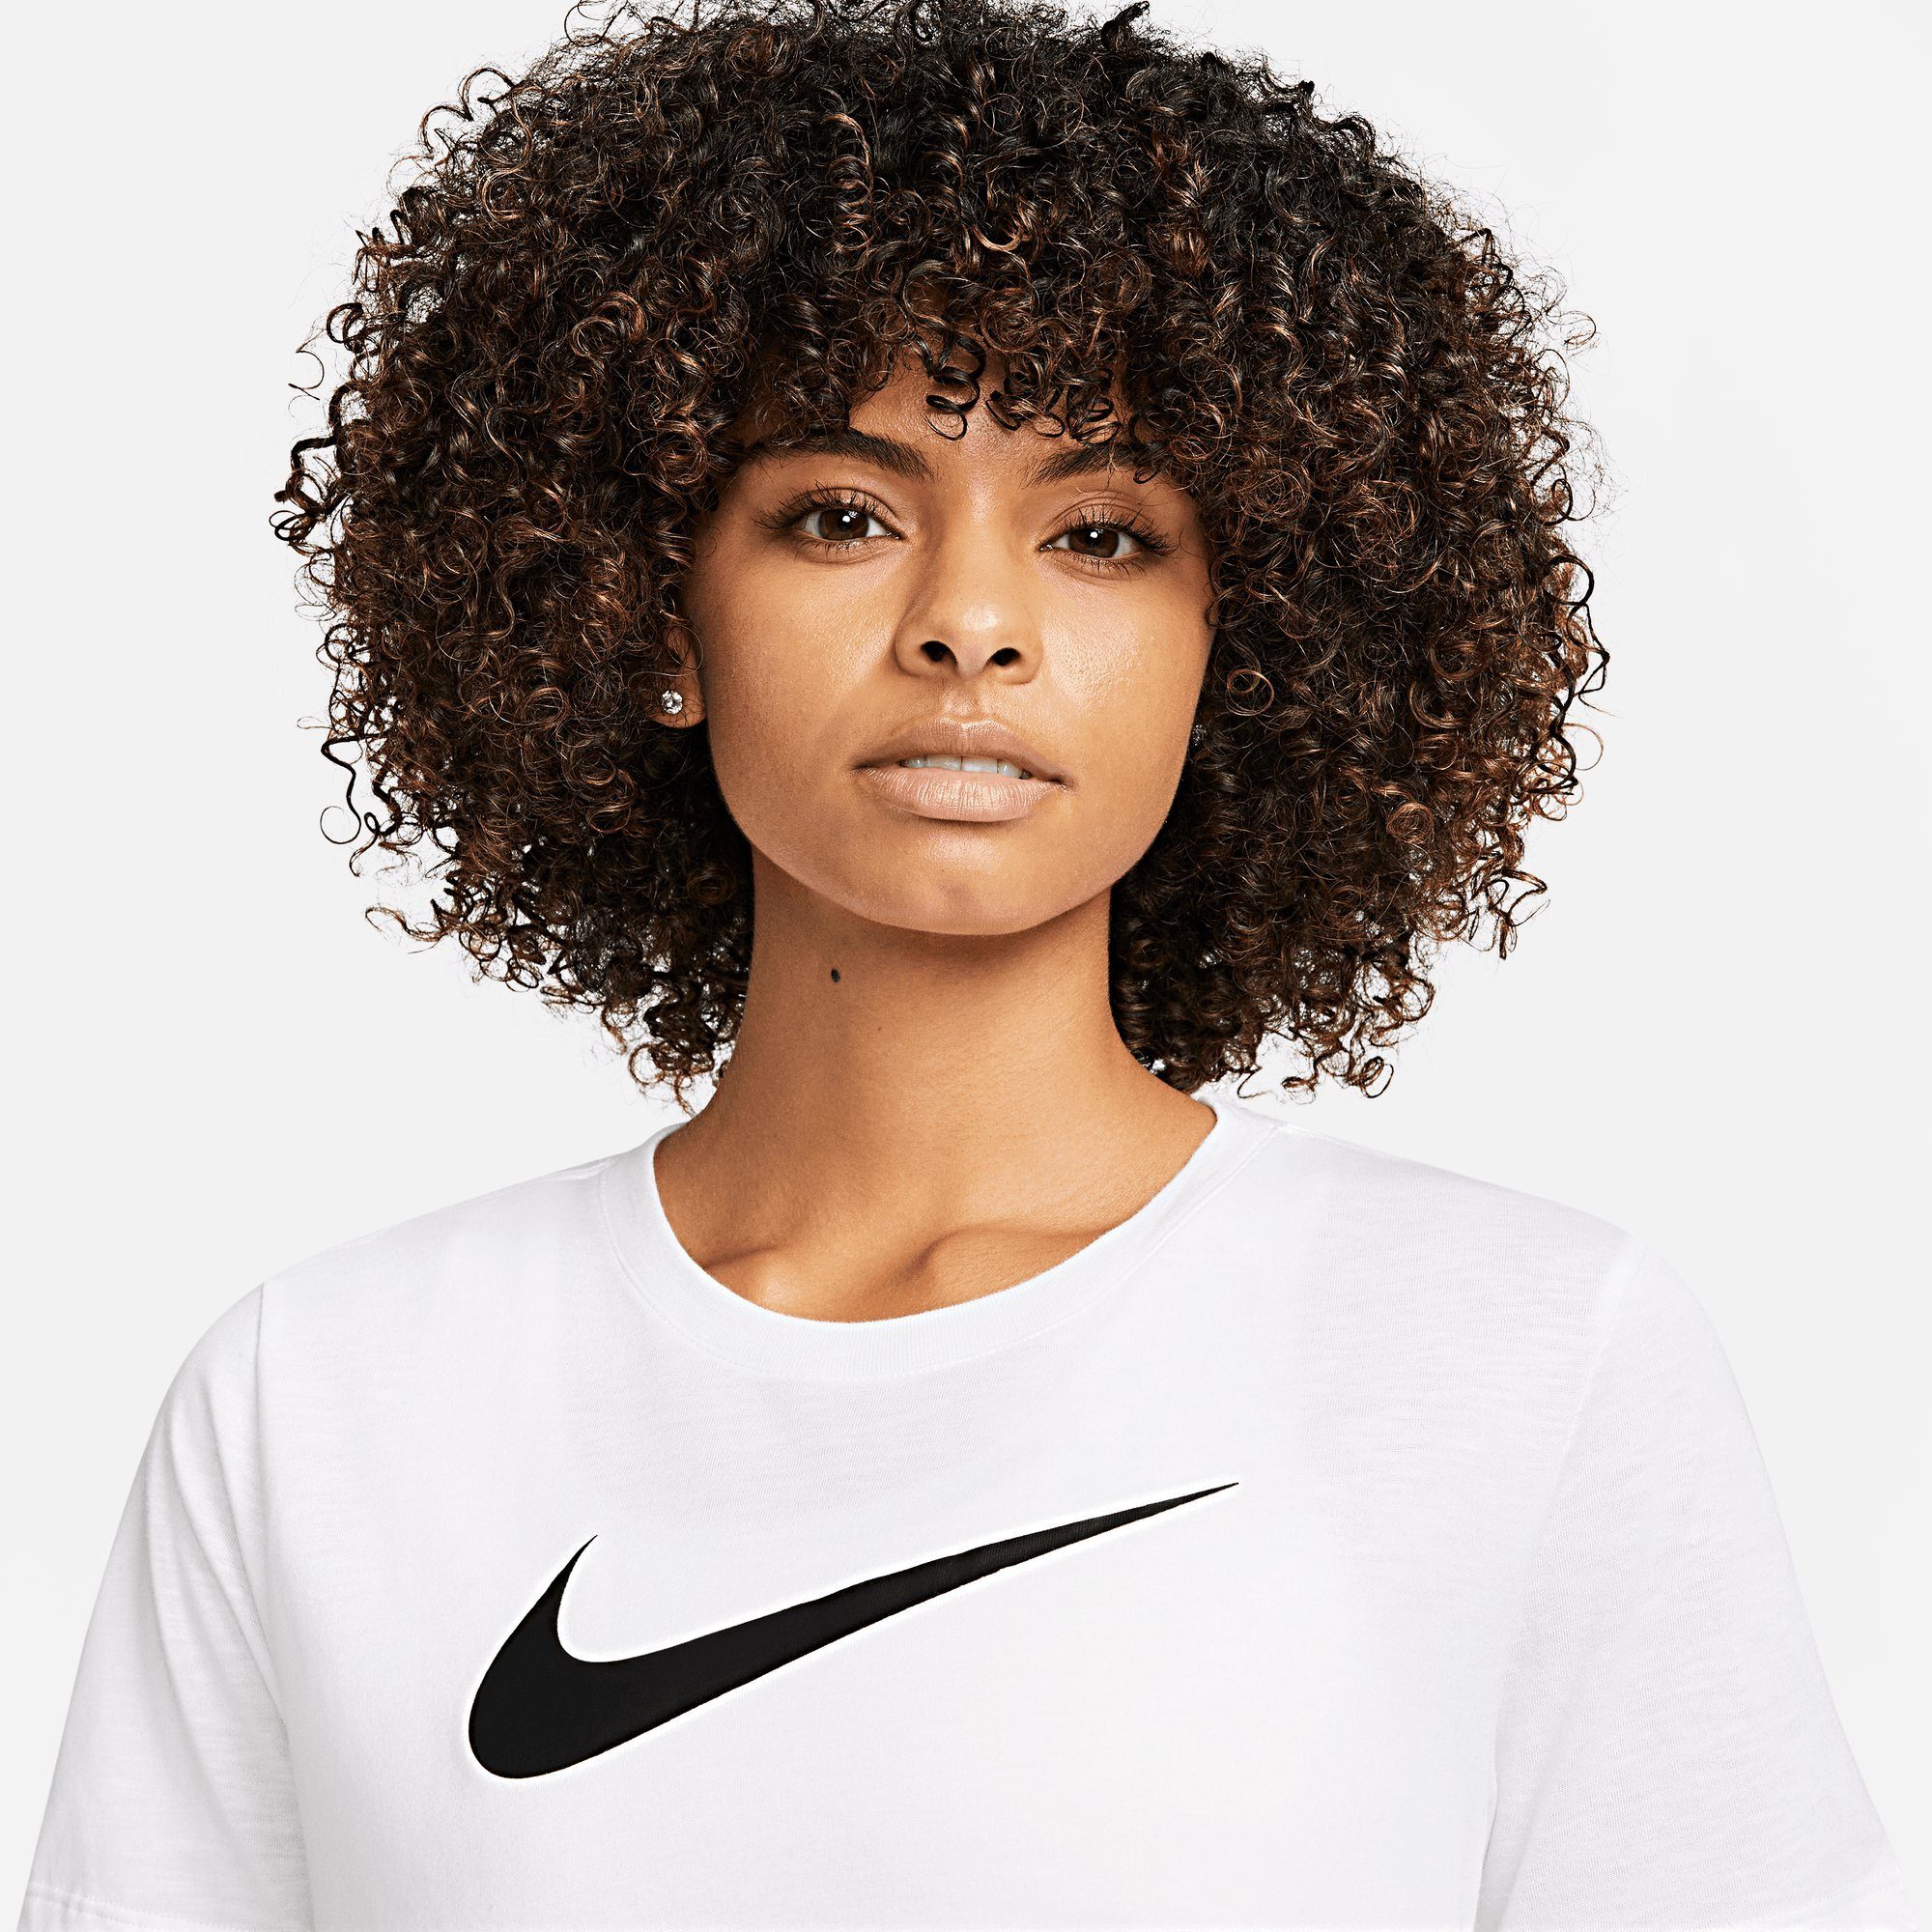 Nike Trainingsshirt DRI-FIT SWOOSH WOMEN'S T-SHIRT